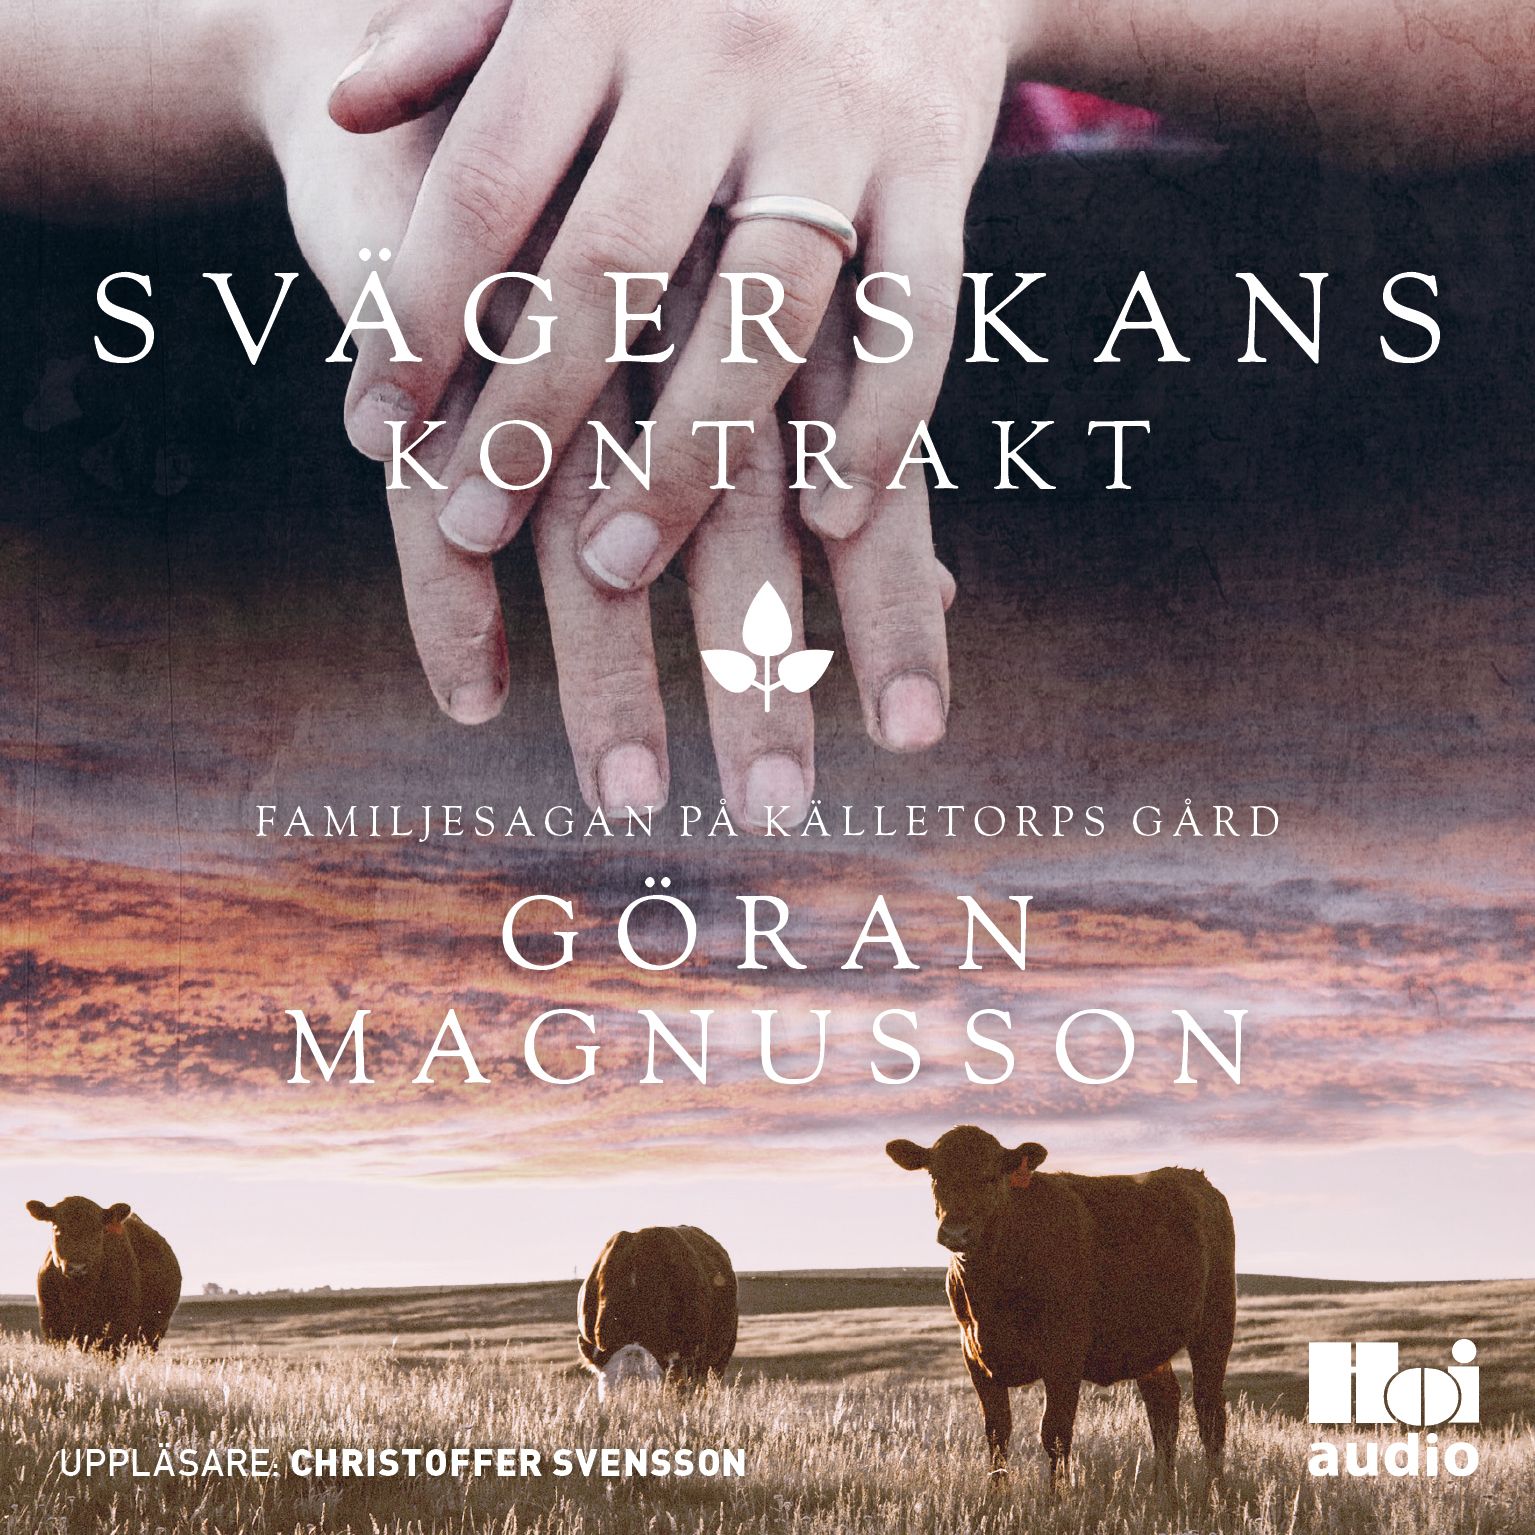 Svägerskans kontrakt, audiobook by Göran Magnusson